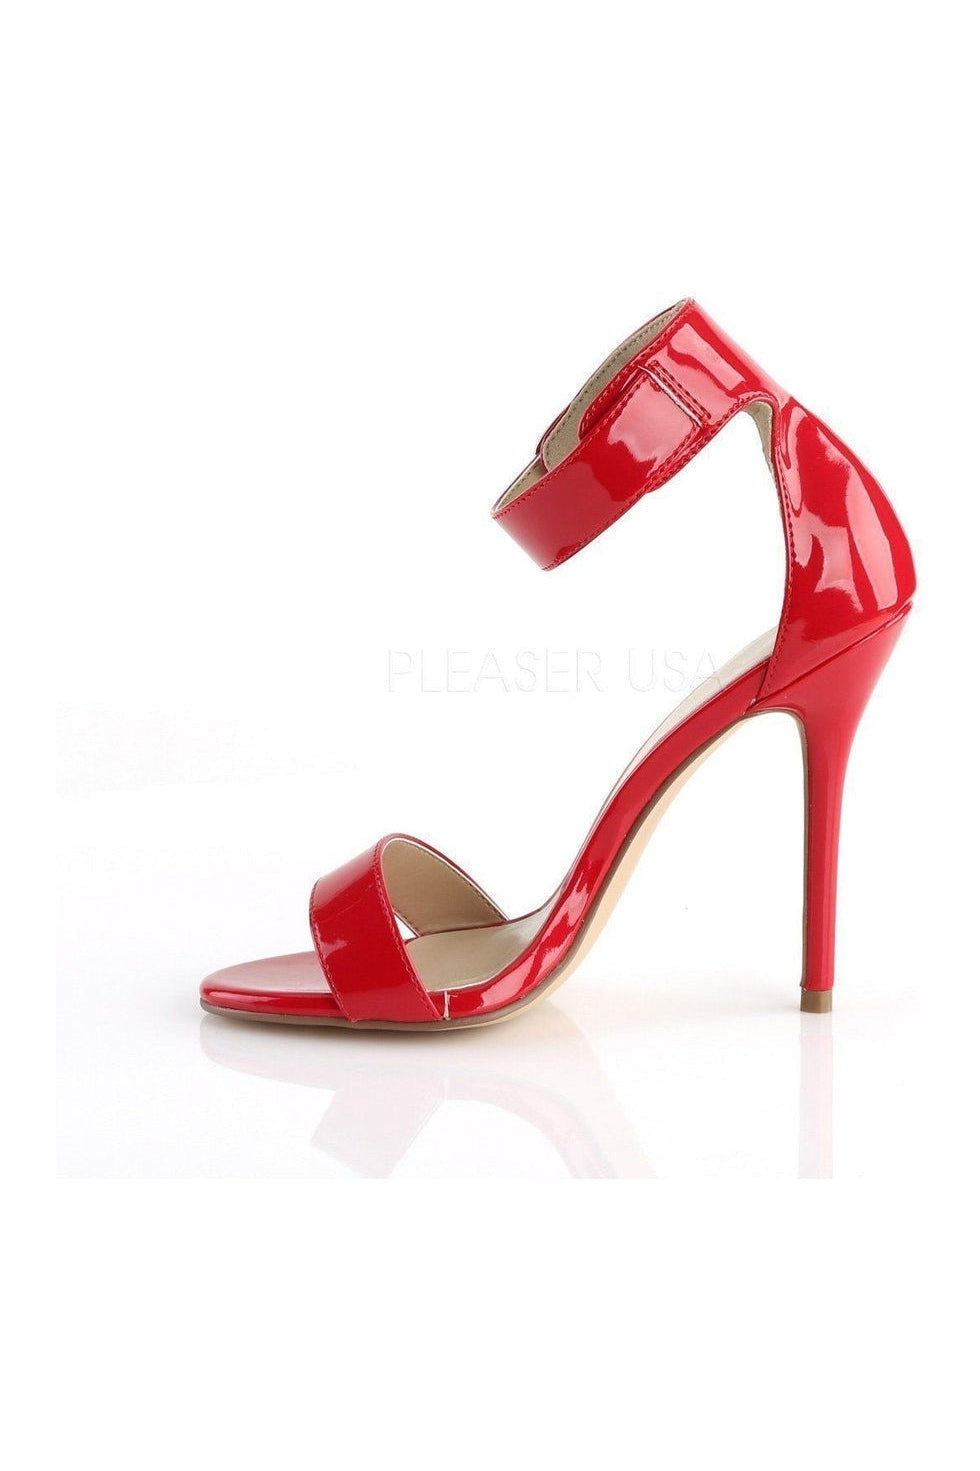 AMUSE-10 Sandal | Red Patent-Pleaser-Sandals-SEXYSHOES.COM